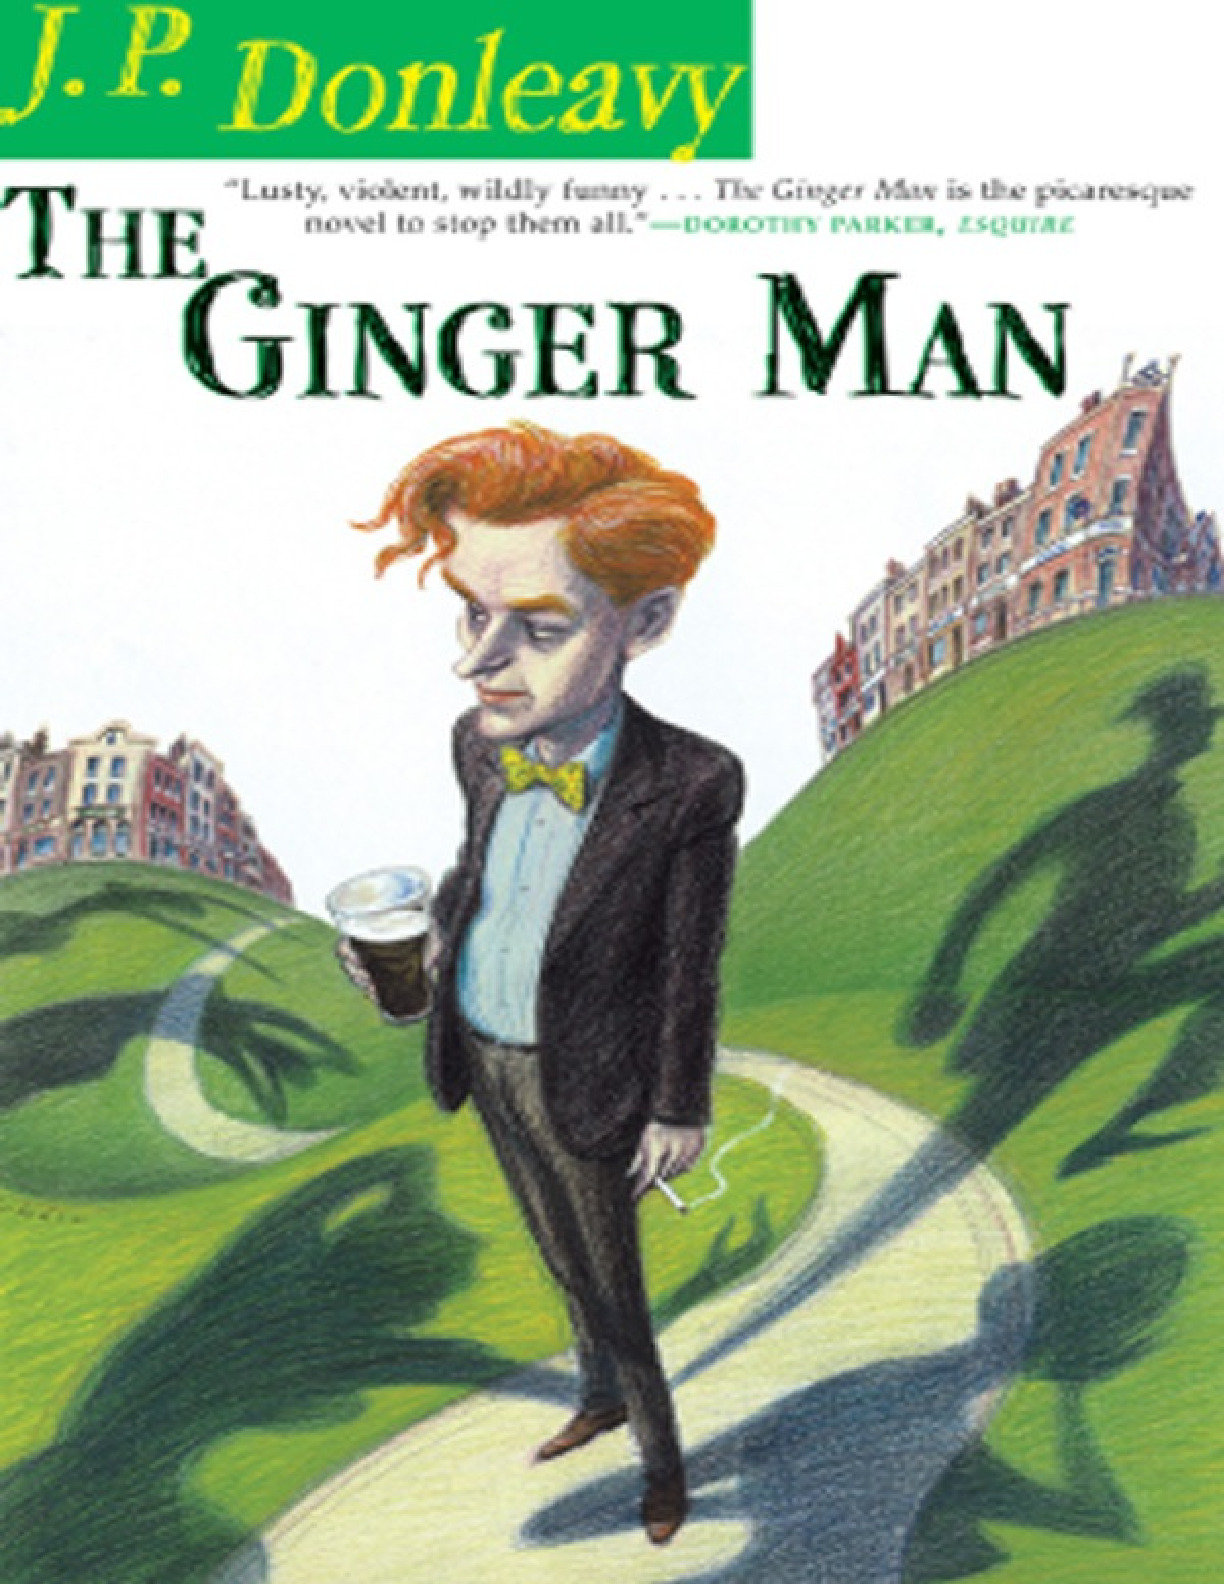 Ginger Man, The – J. P. Donleavy